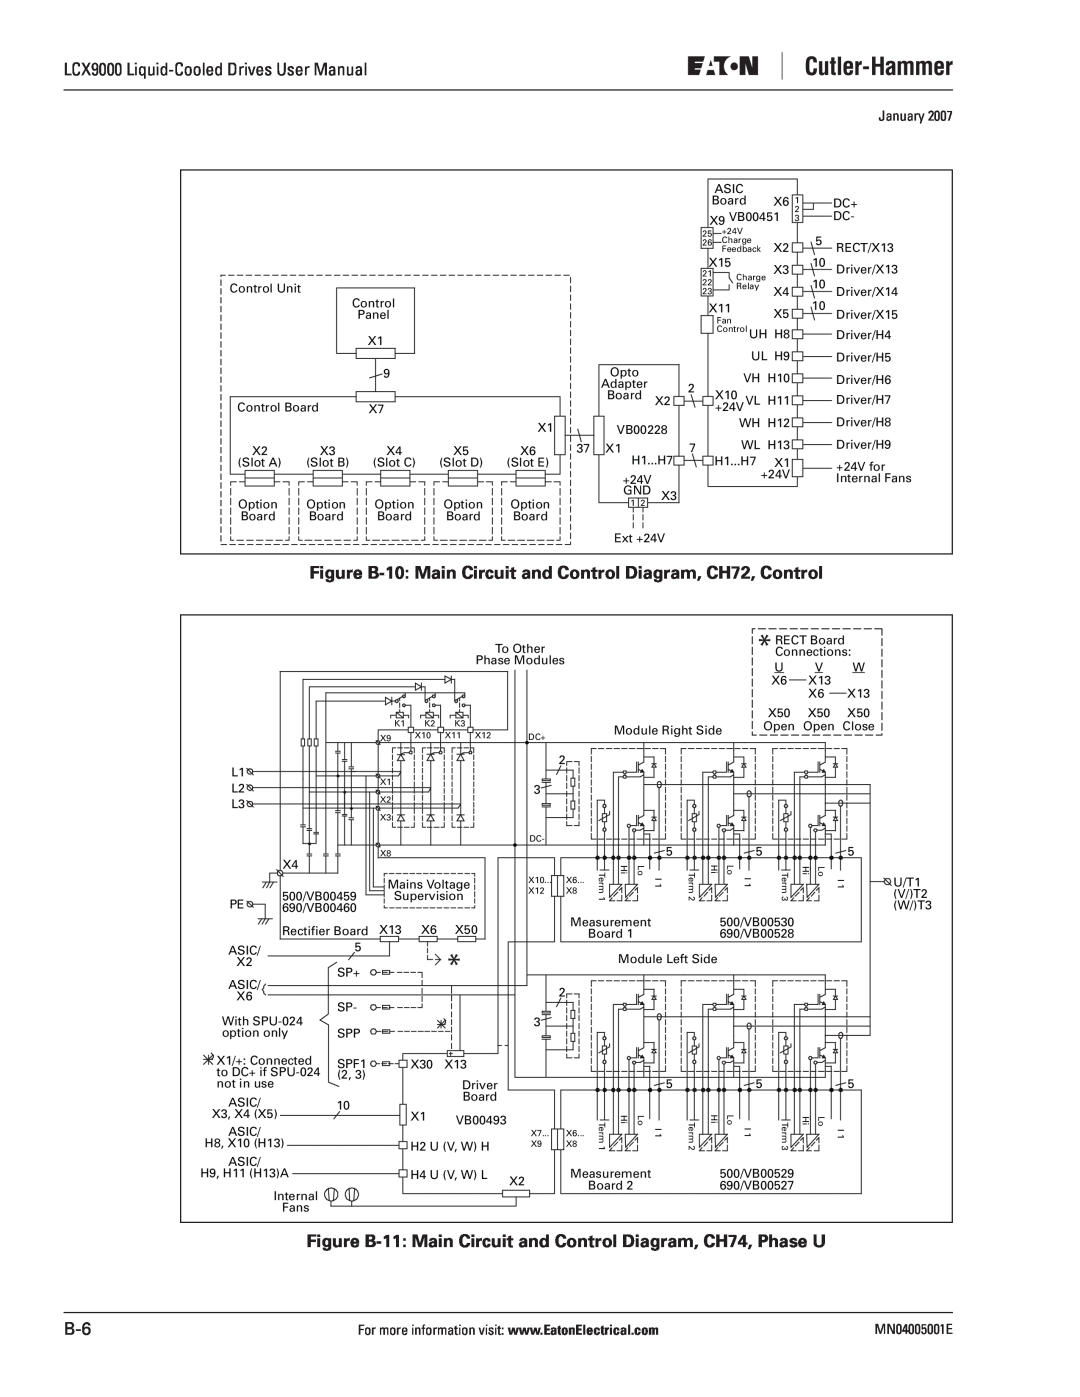 J. T. Eaton Figure B-10 Main Circuit and Control Diagram, CH72, Control, LCX9000 Liquid-Cooled Drives User Manual 